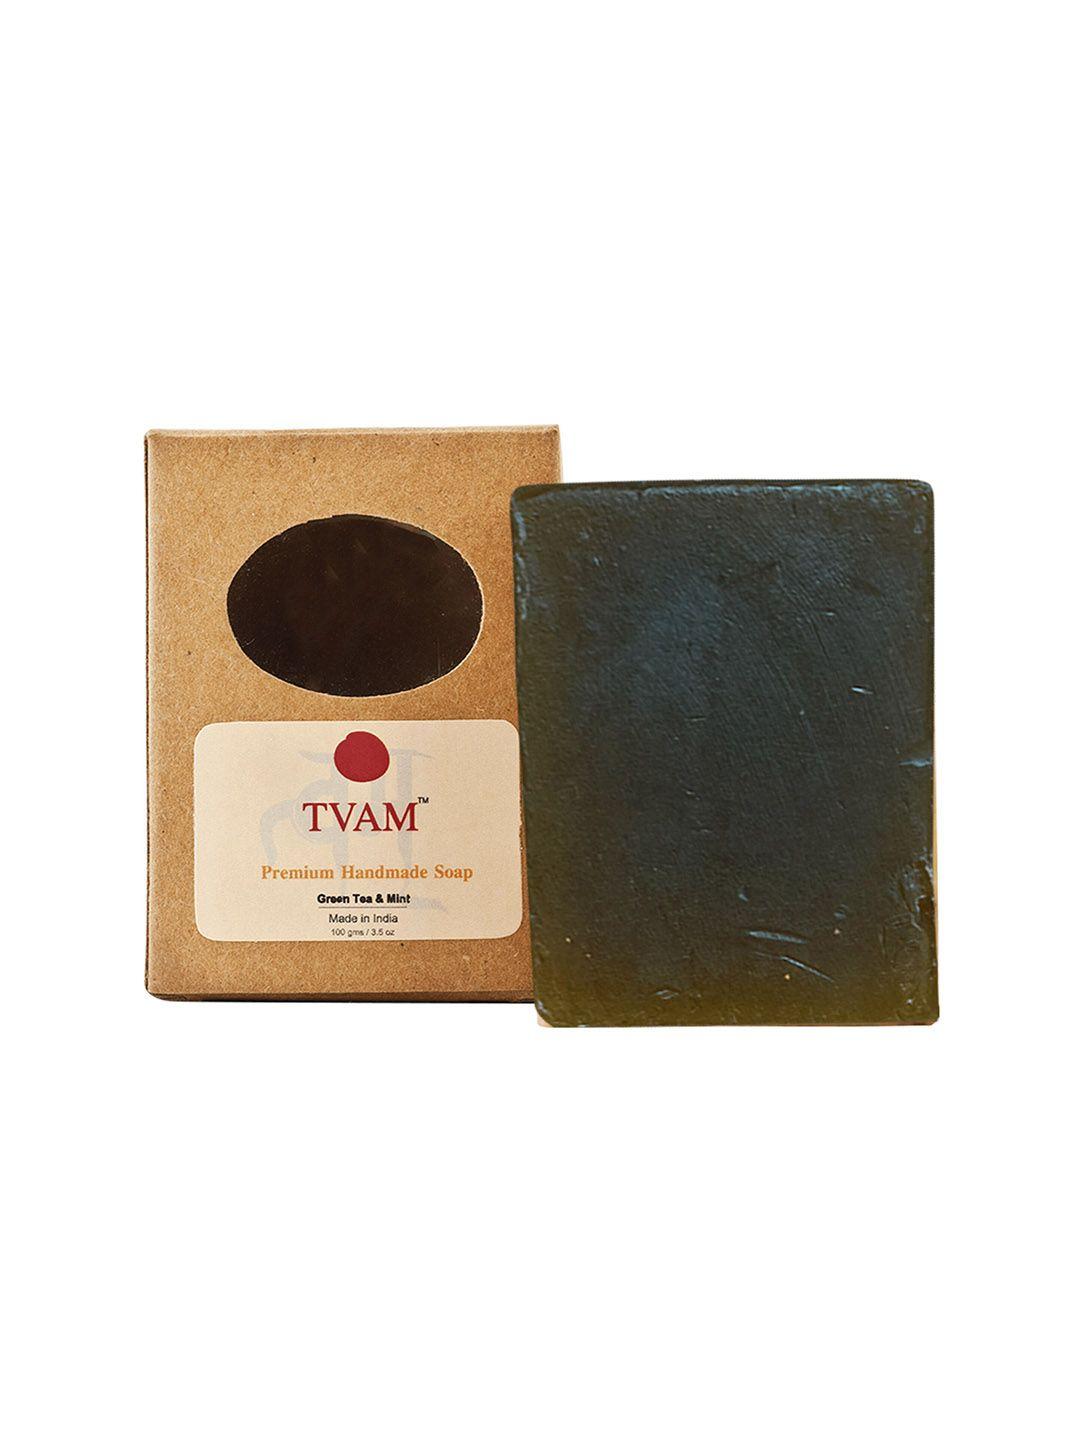 tvam home green tea & mint handmade soap